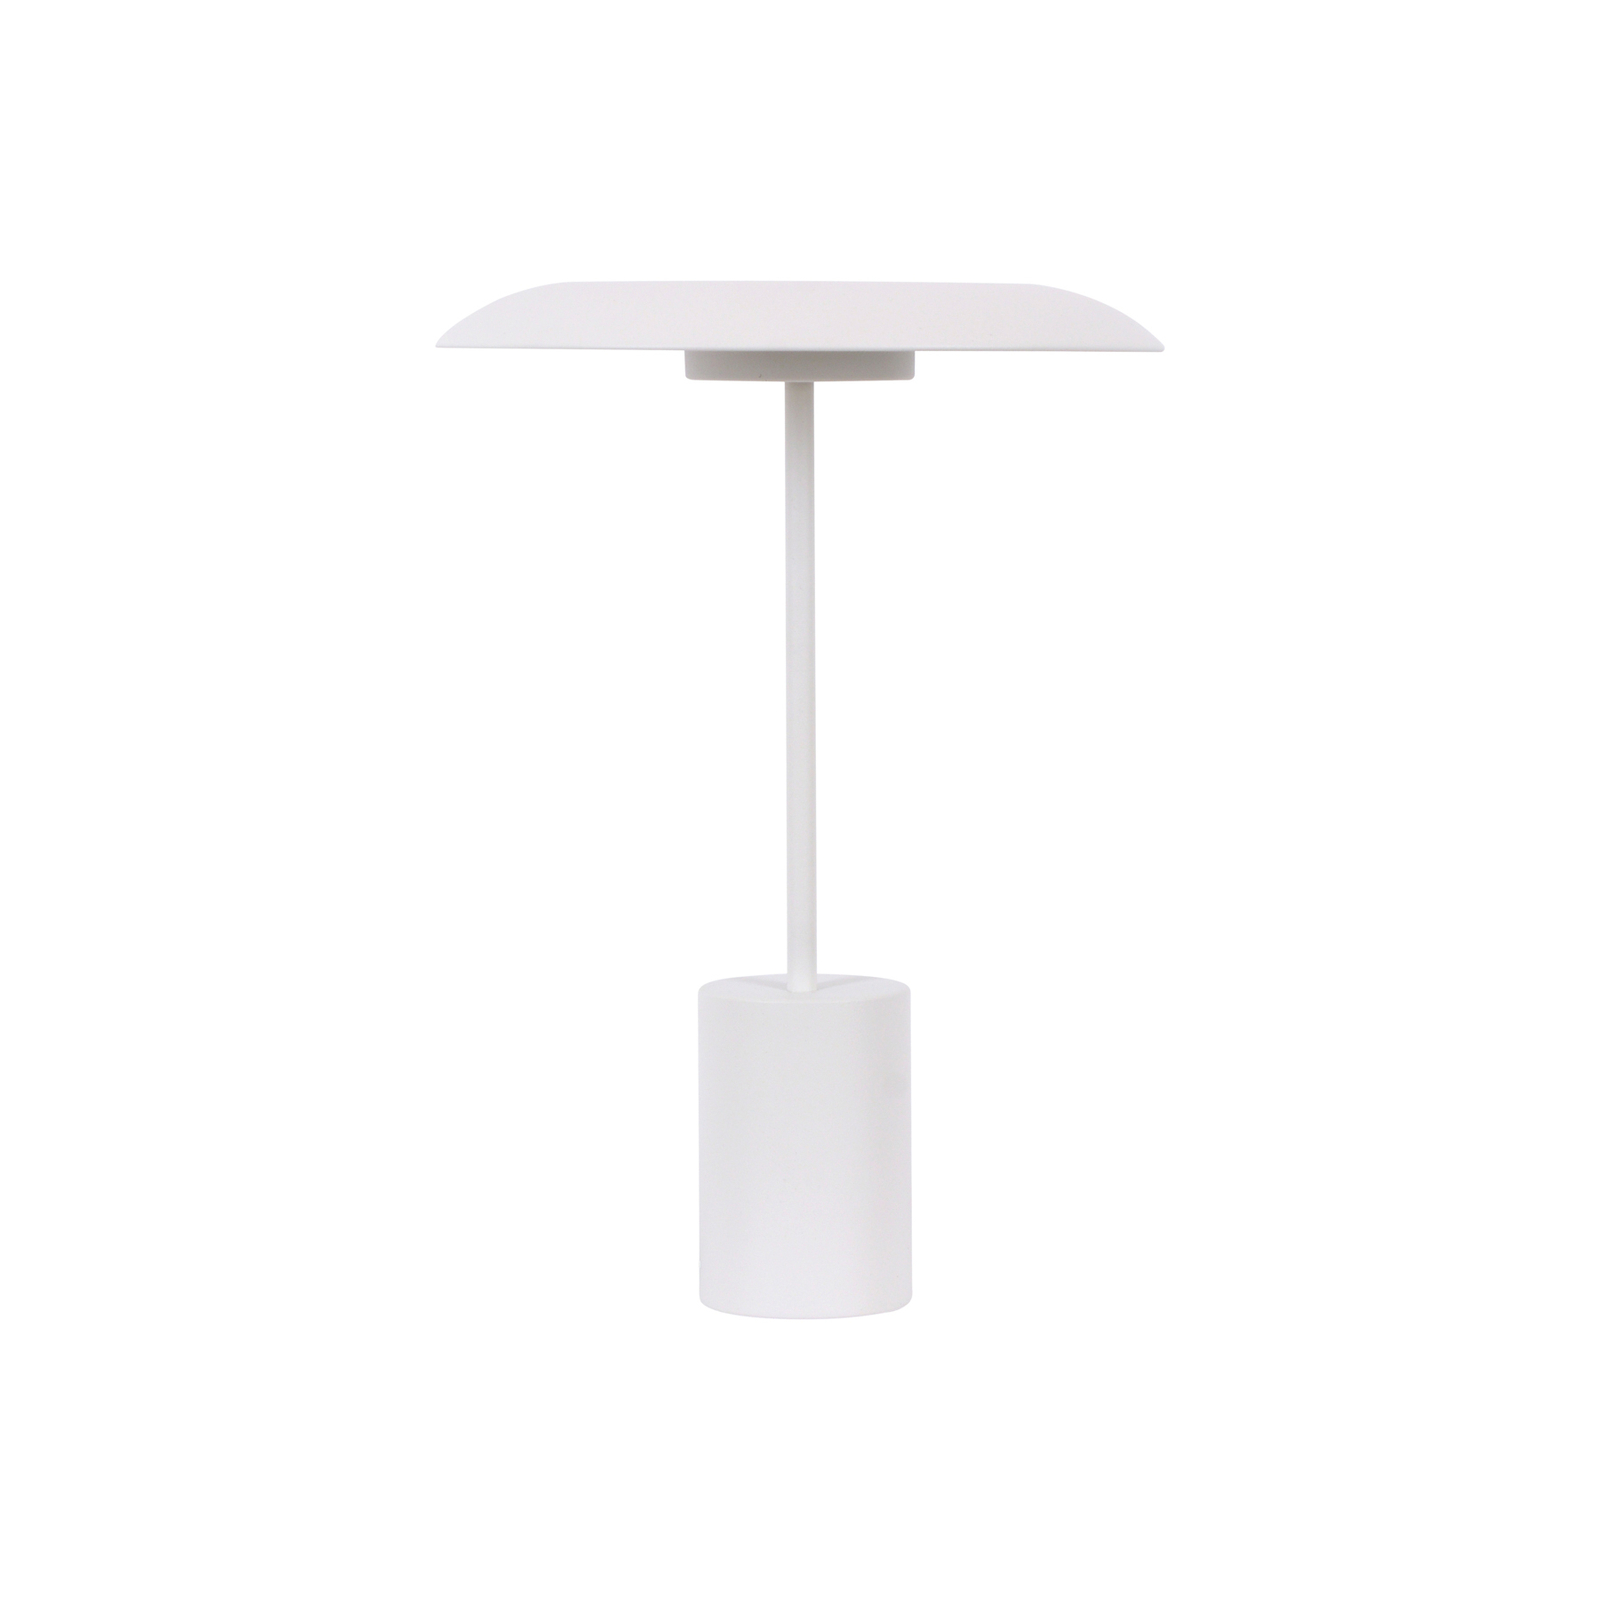 Stolná LED lampa Beacon Smith, biela, kov, USB port